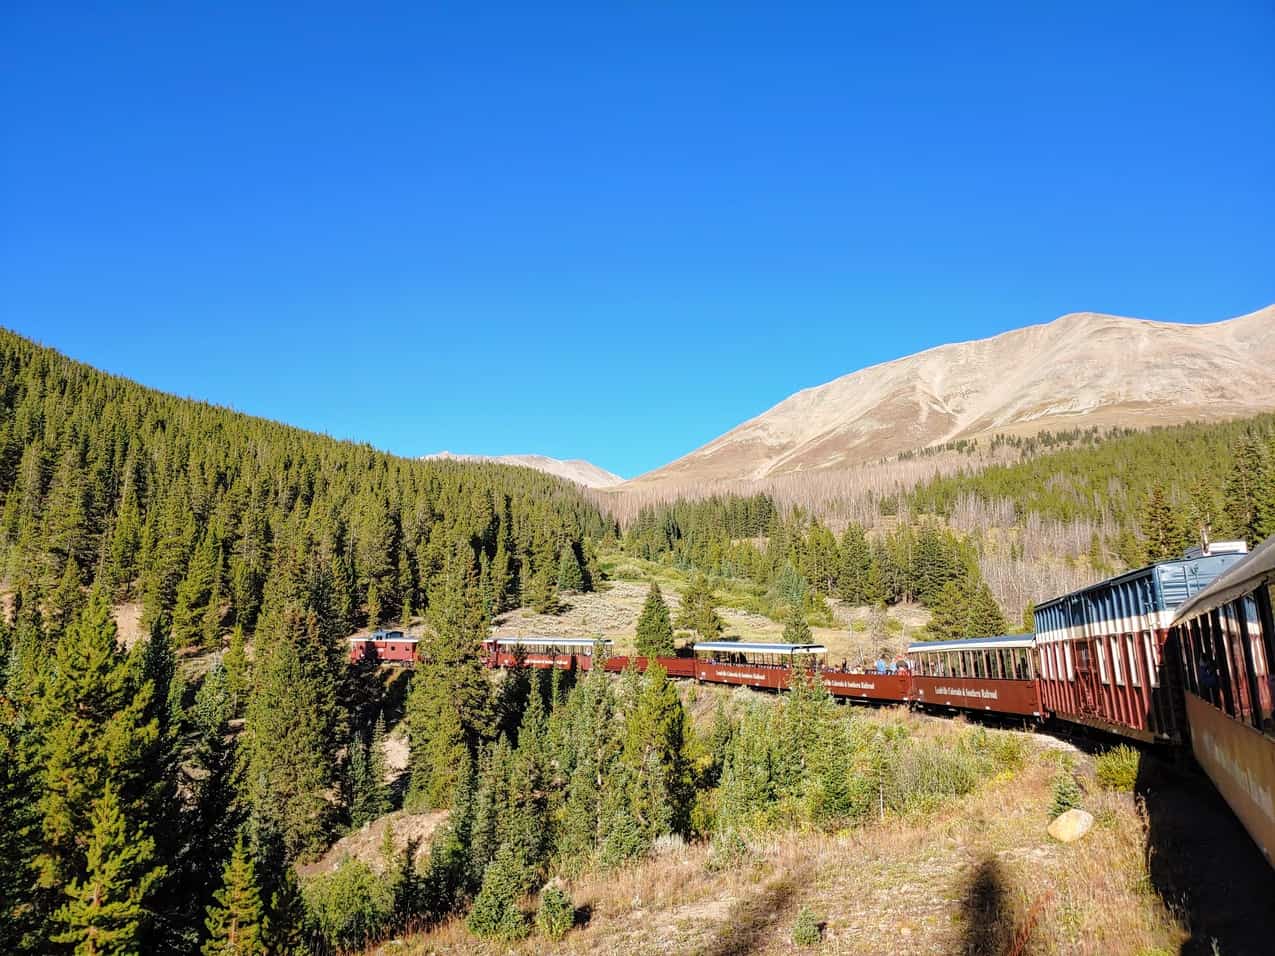 Leadville train on the tracks headed through a high mountain pass